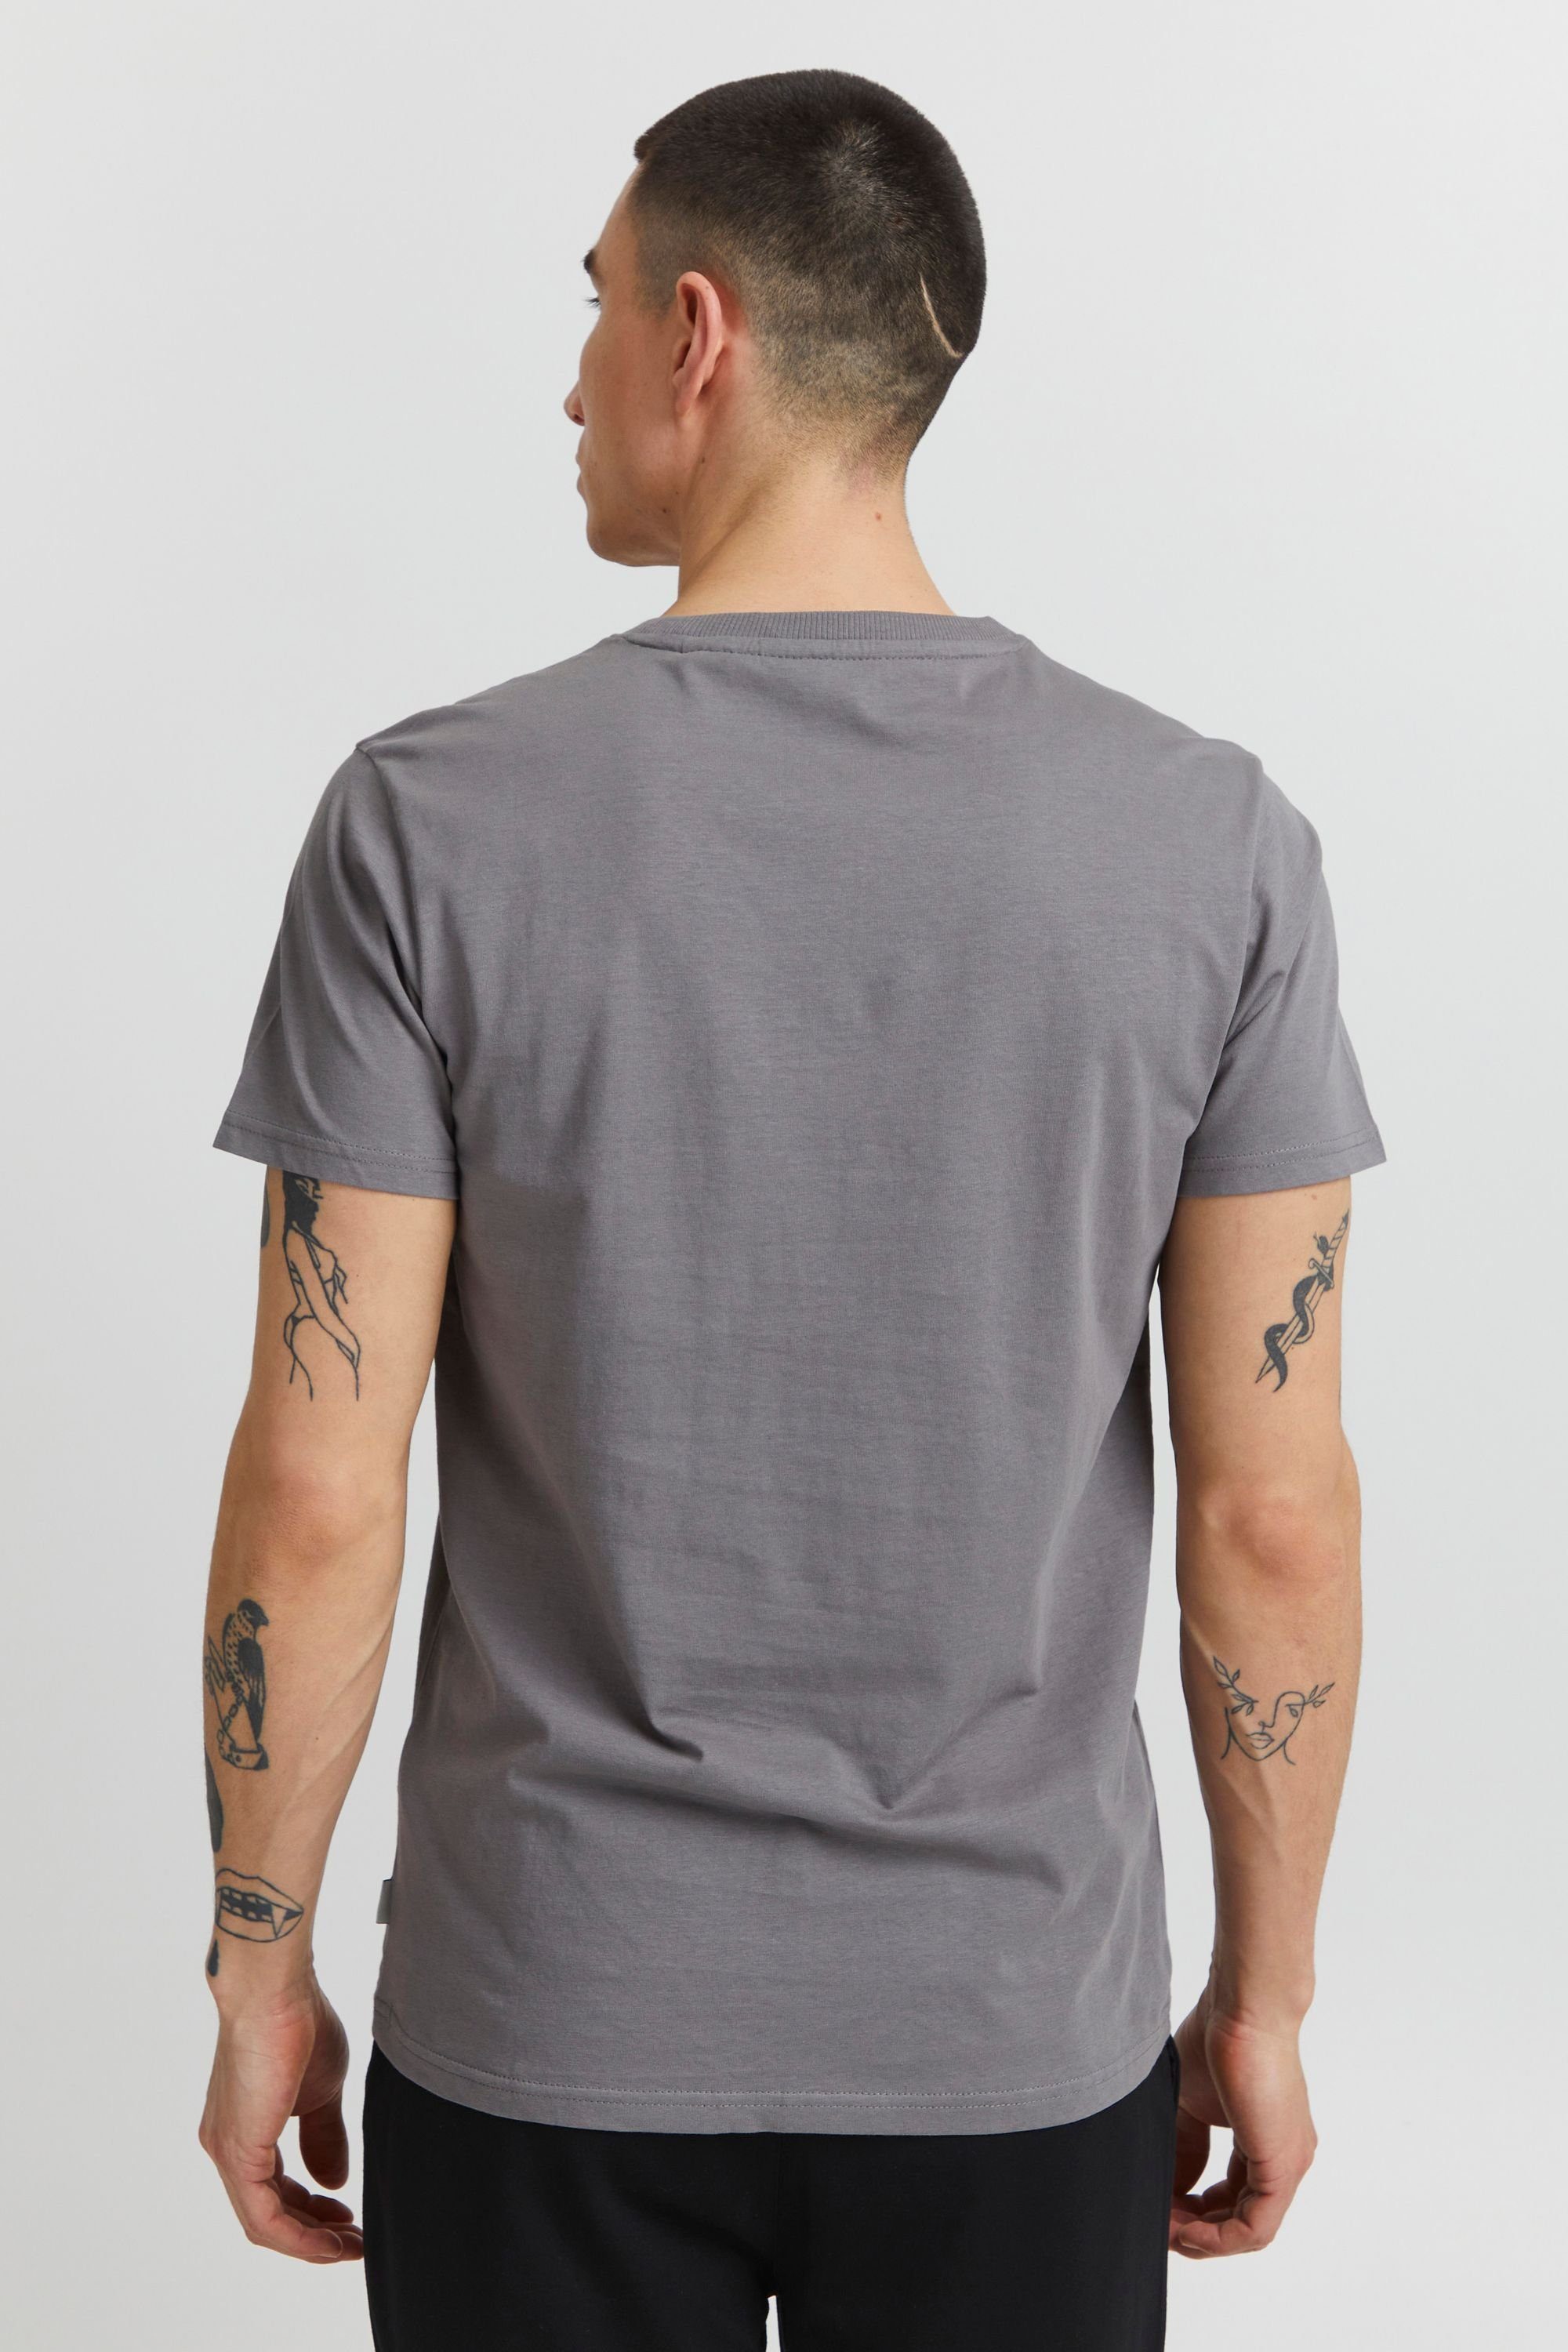 Grey Project Project PRBertram T-Shirt 11 11 Mid